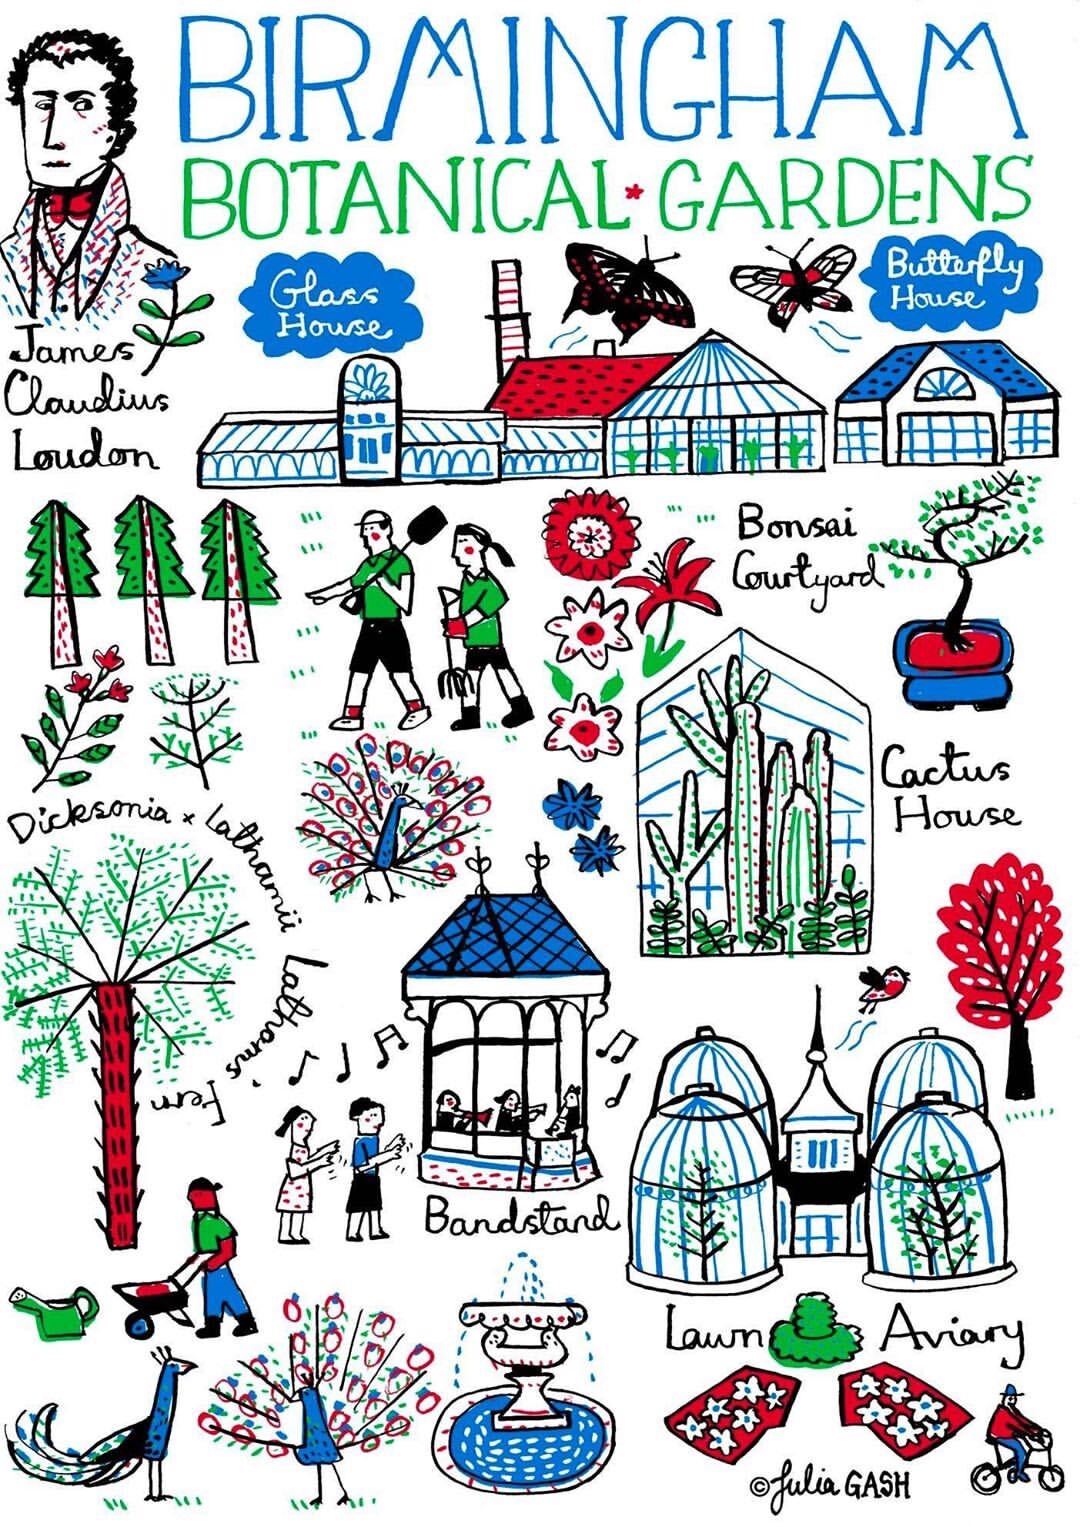 Julia Gash's creative collaboration with Birmingham Botanical Gardens